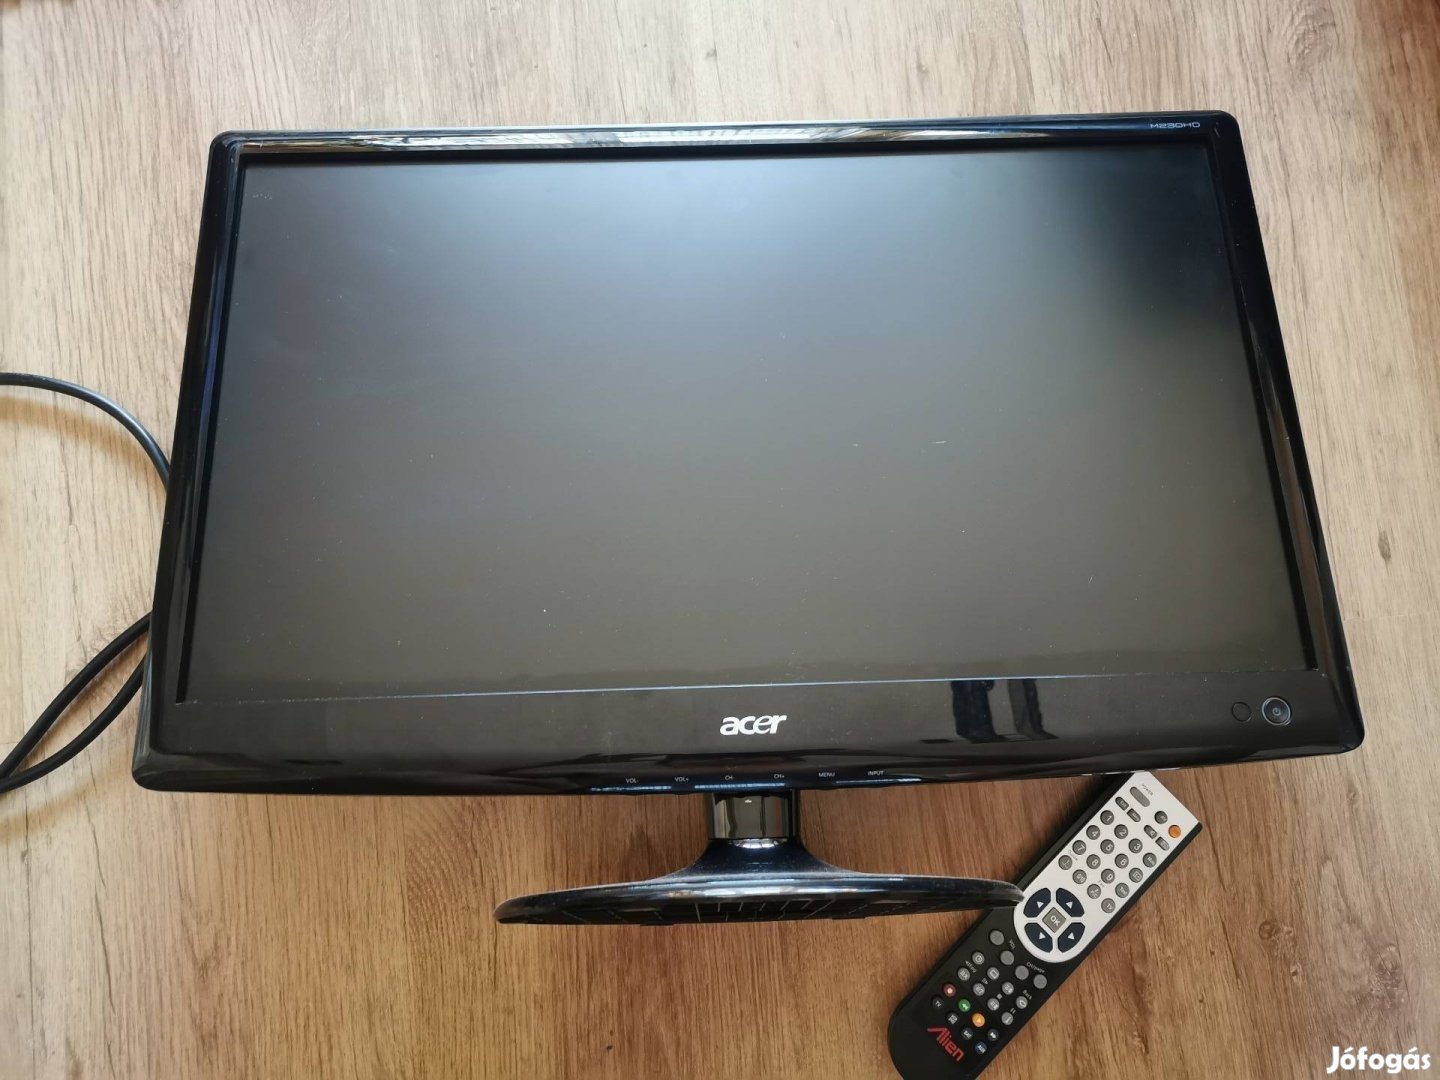 Eladó Acer M 230 Lcd Tv-Monitor 23" 58 cm képátló